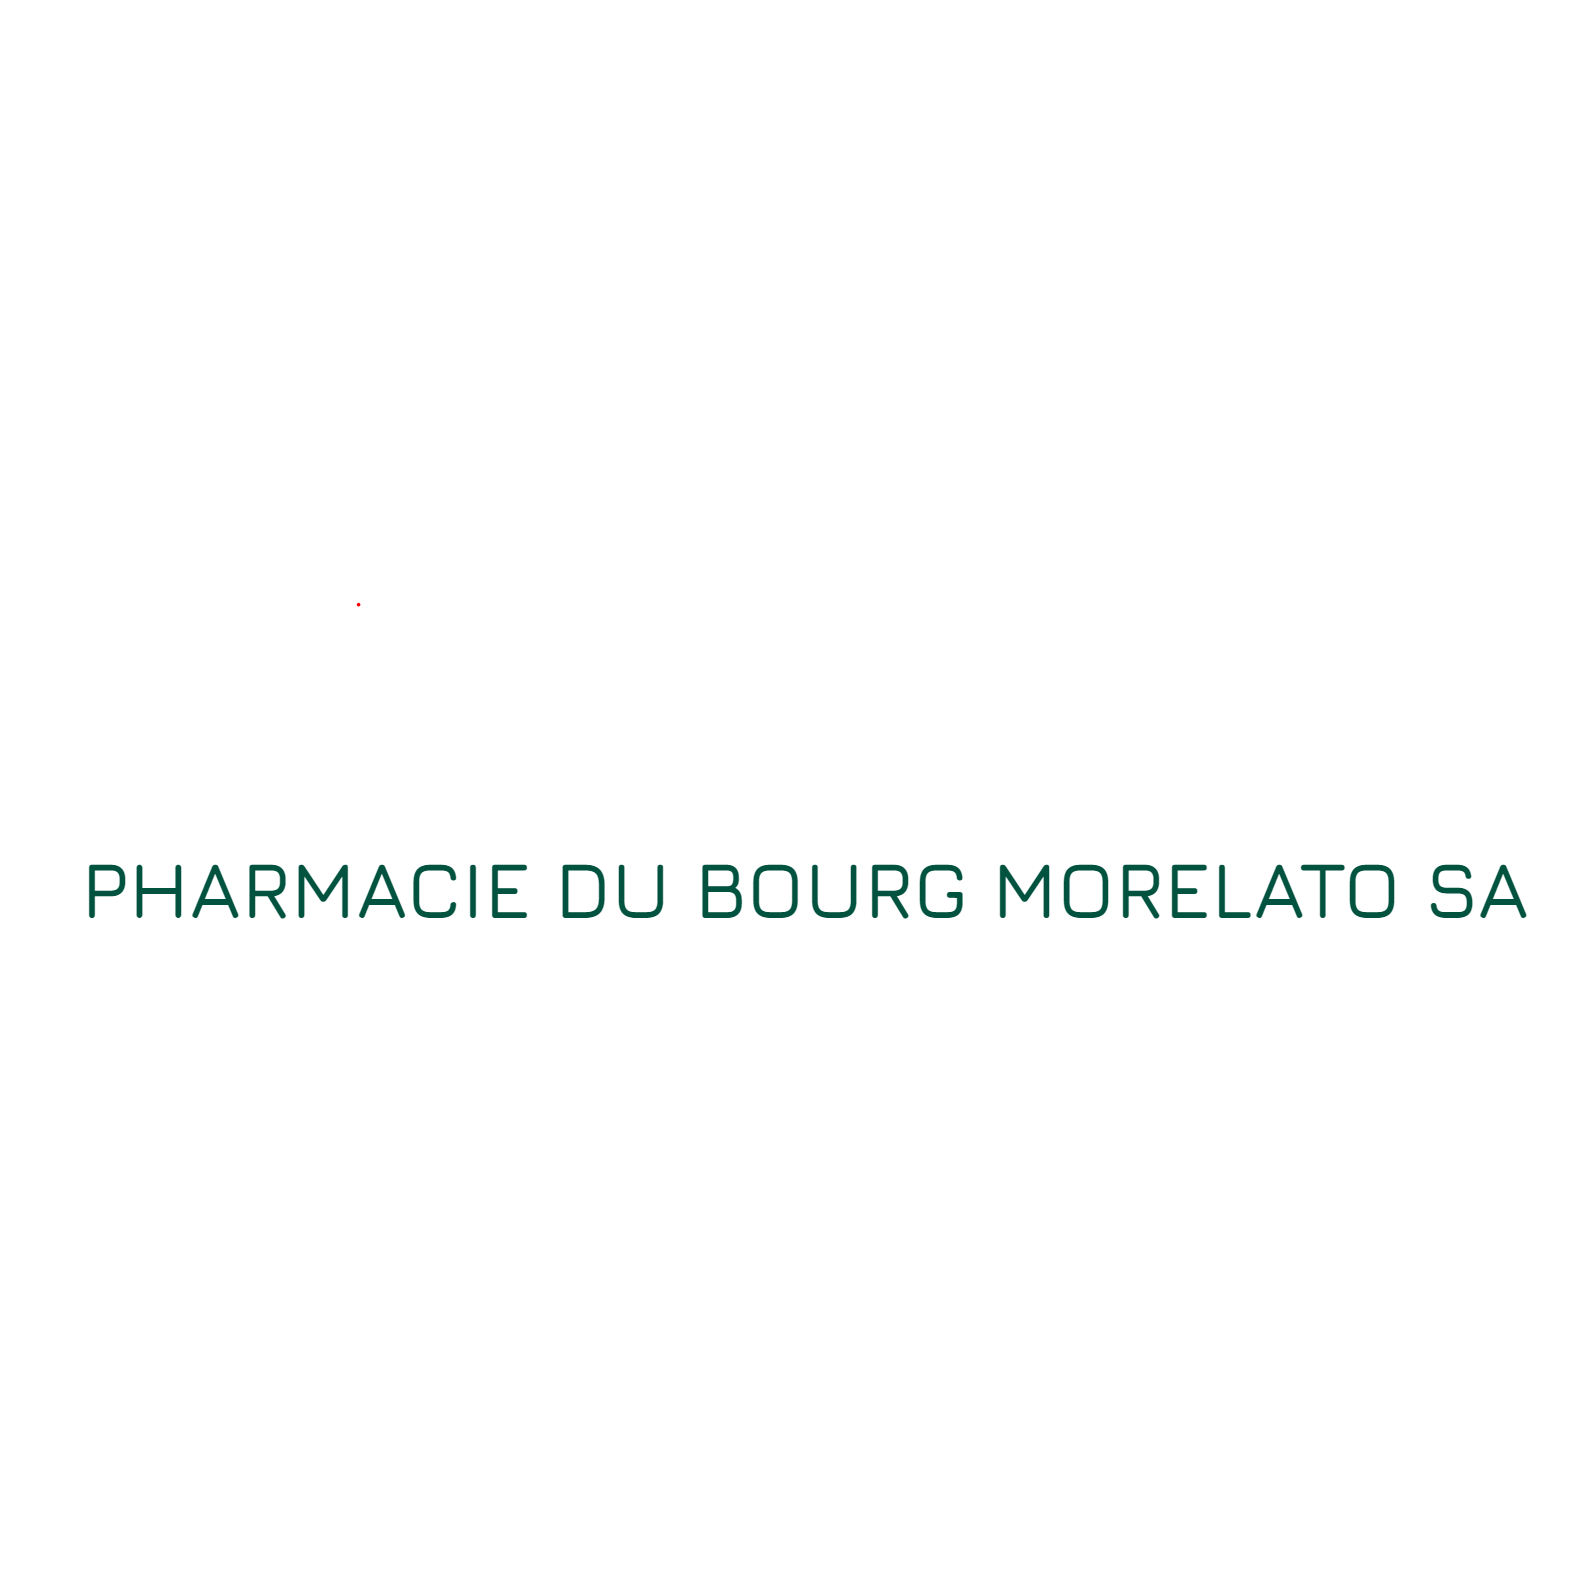 Pharmacie du Bourg Morelato SA Logo